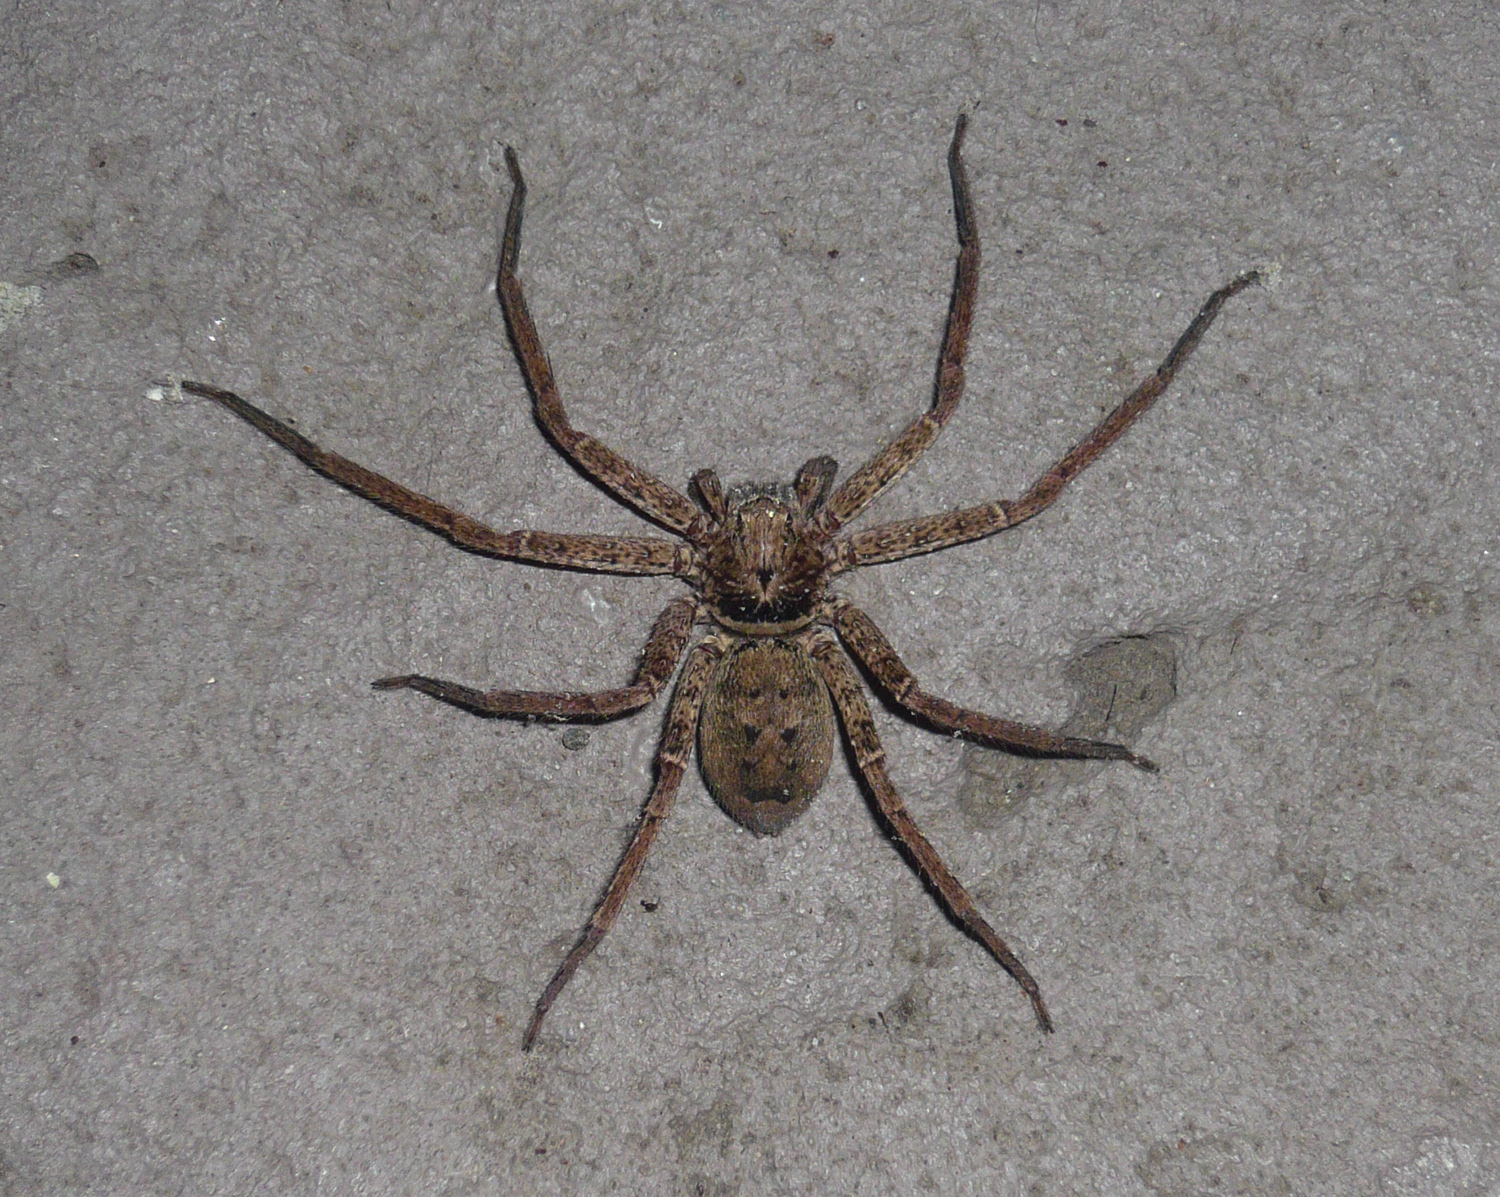 Huntsman spider. Photo credit: eliotc via Foter.com / CC BY-NC